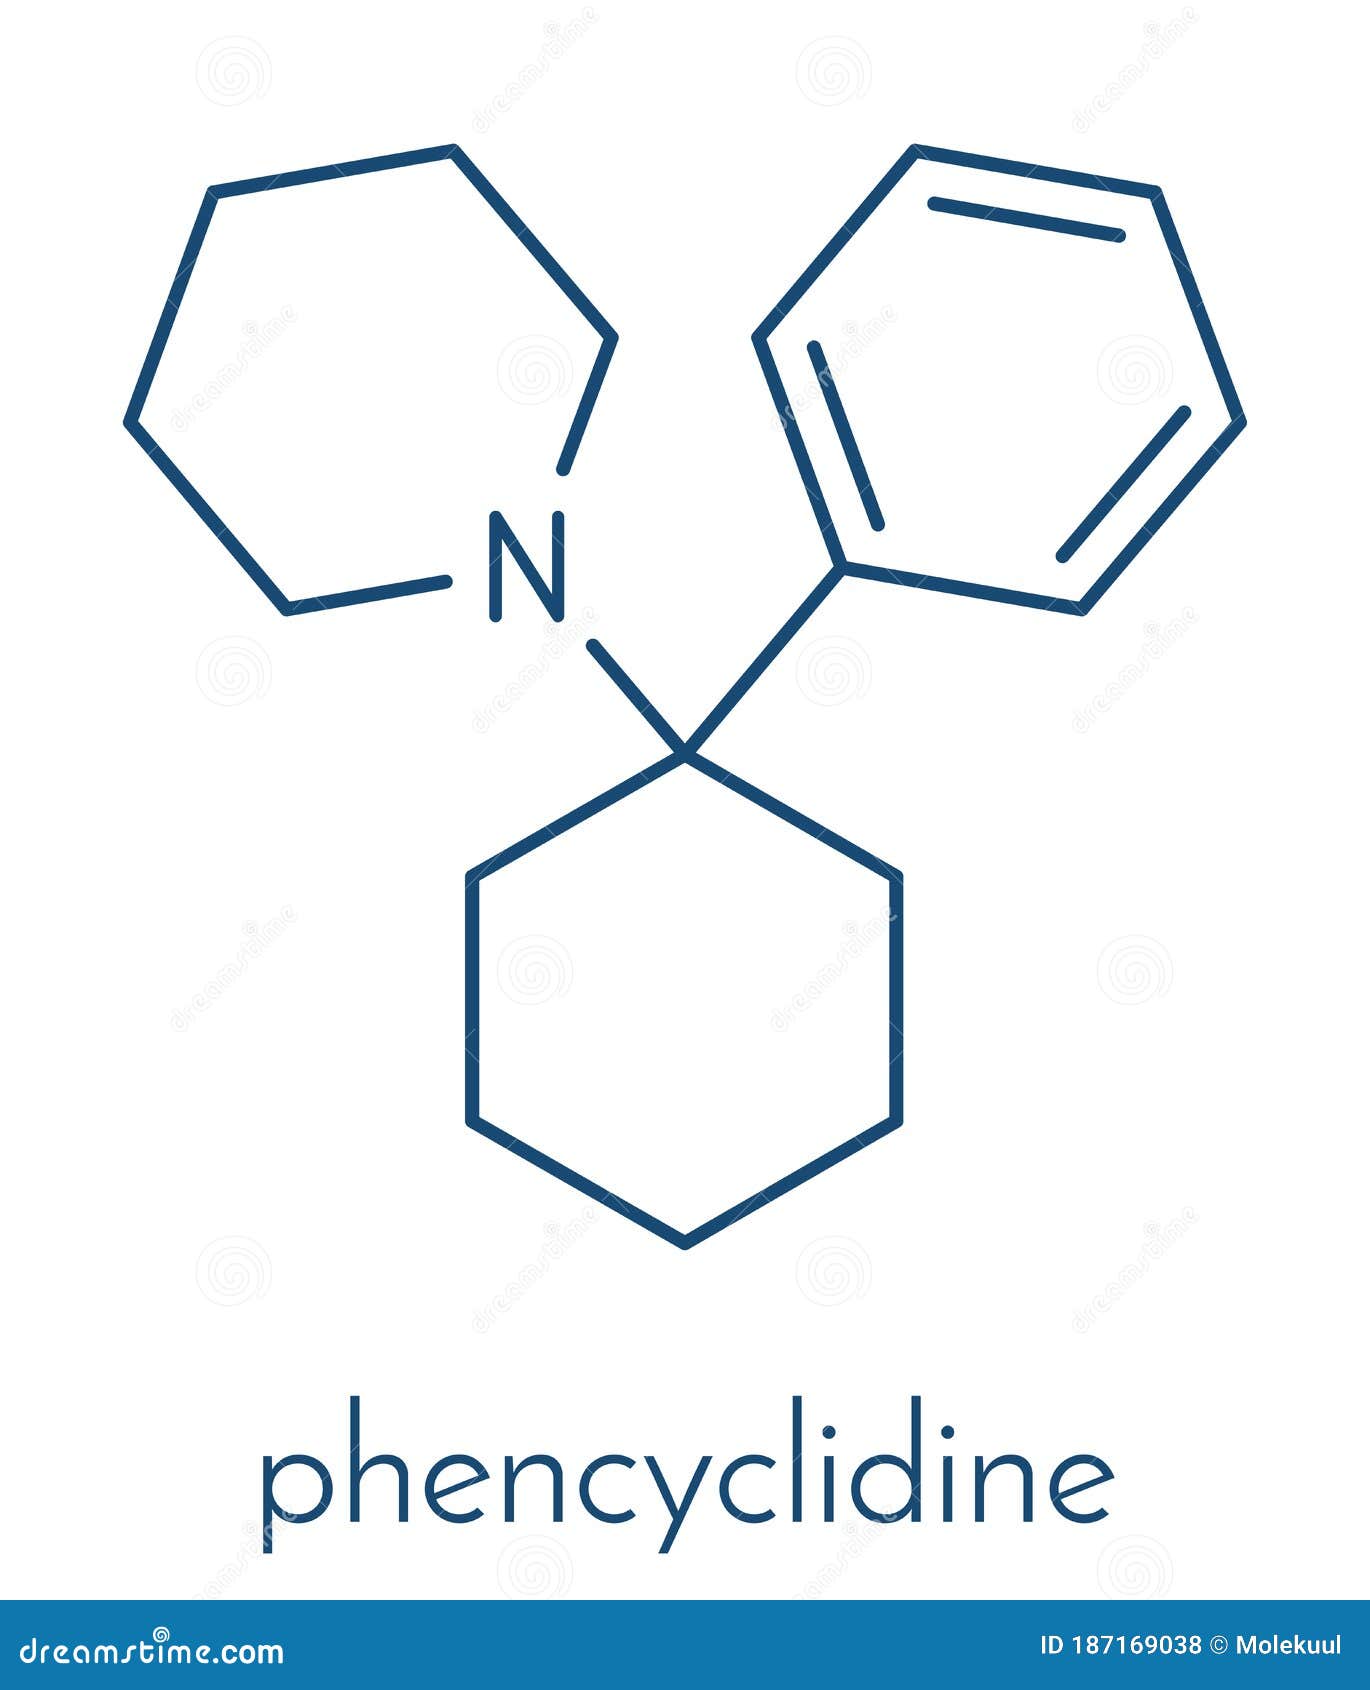 Fencyclidine Pcp Angel Hallucinogene Geneesmiddelmolecule. Skeletformule. Vector Illustratie - Illustration of atomen, engel: 187169038